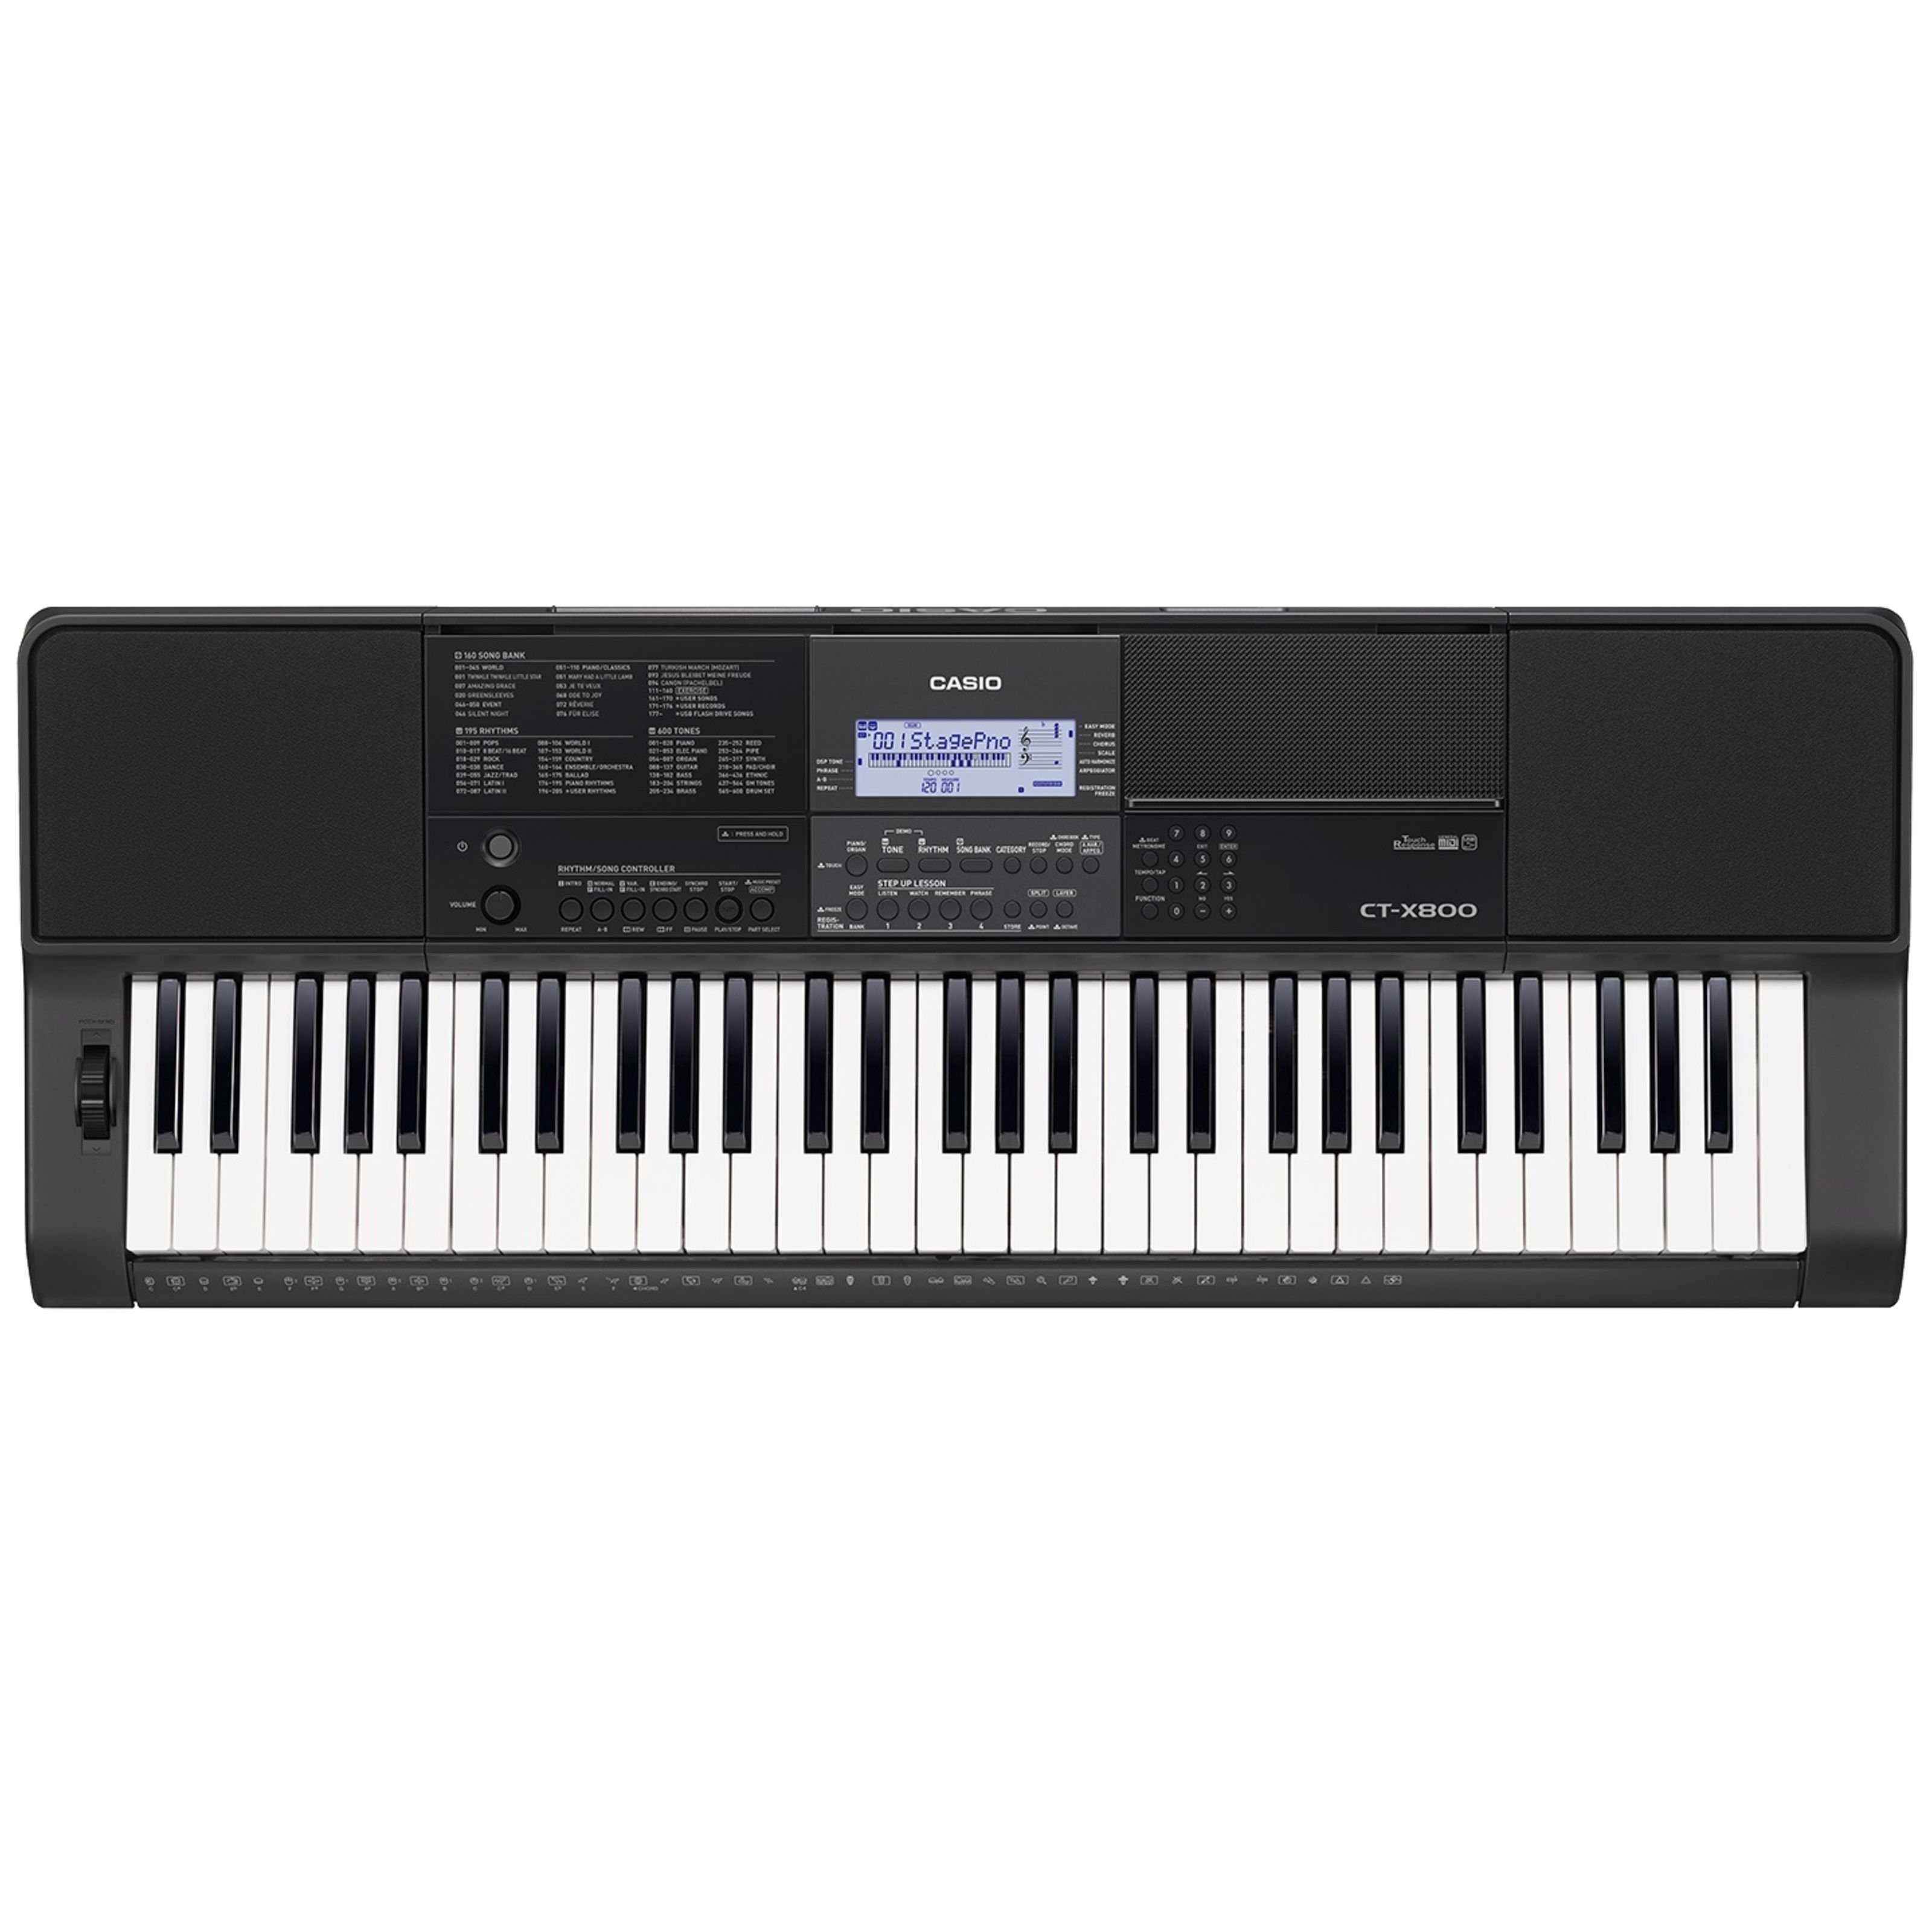 CASIO Home Keyboard, CT-X800 - Keyboard | Keyboards